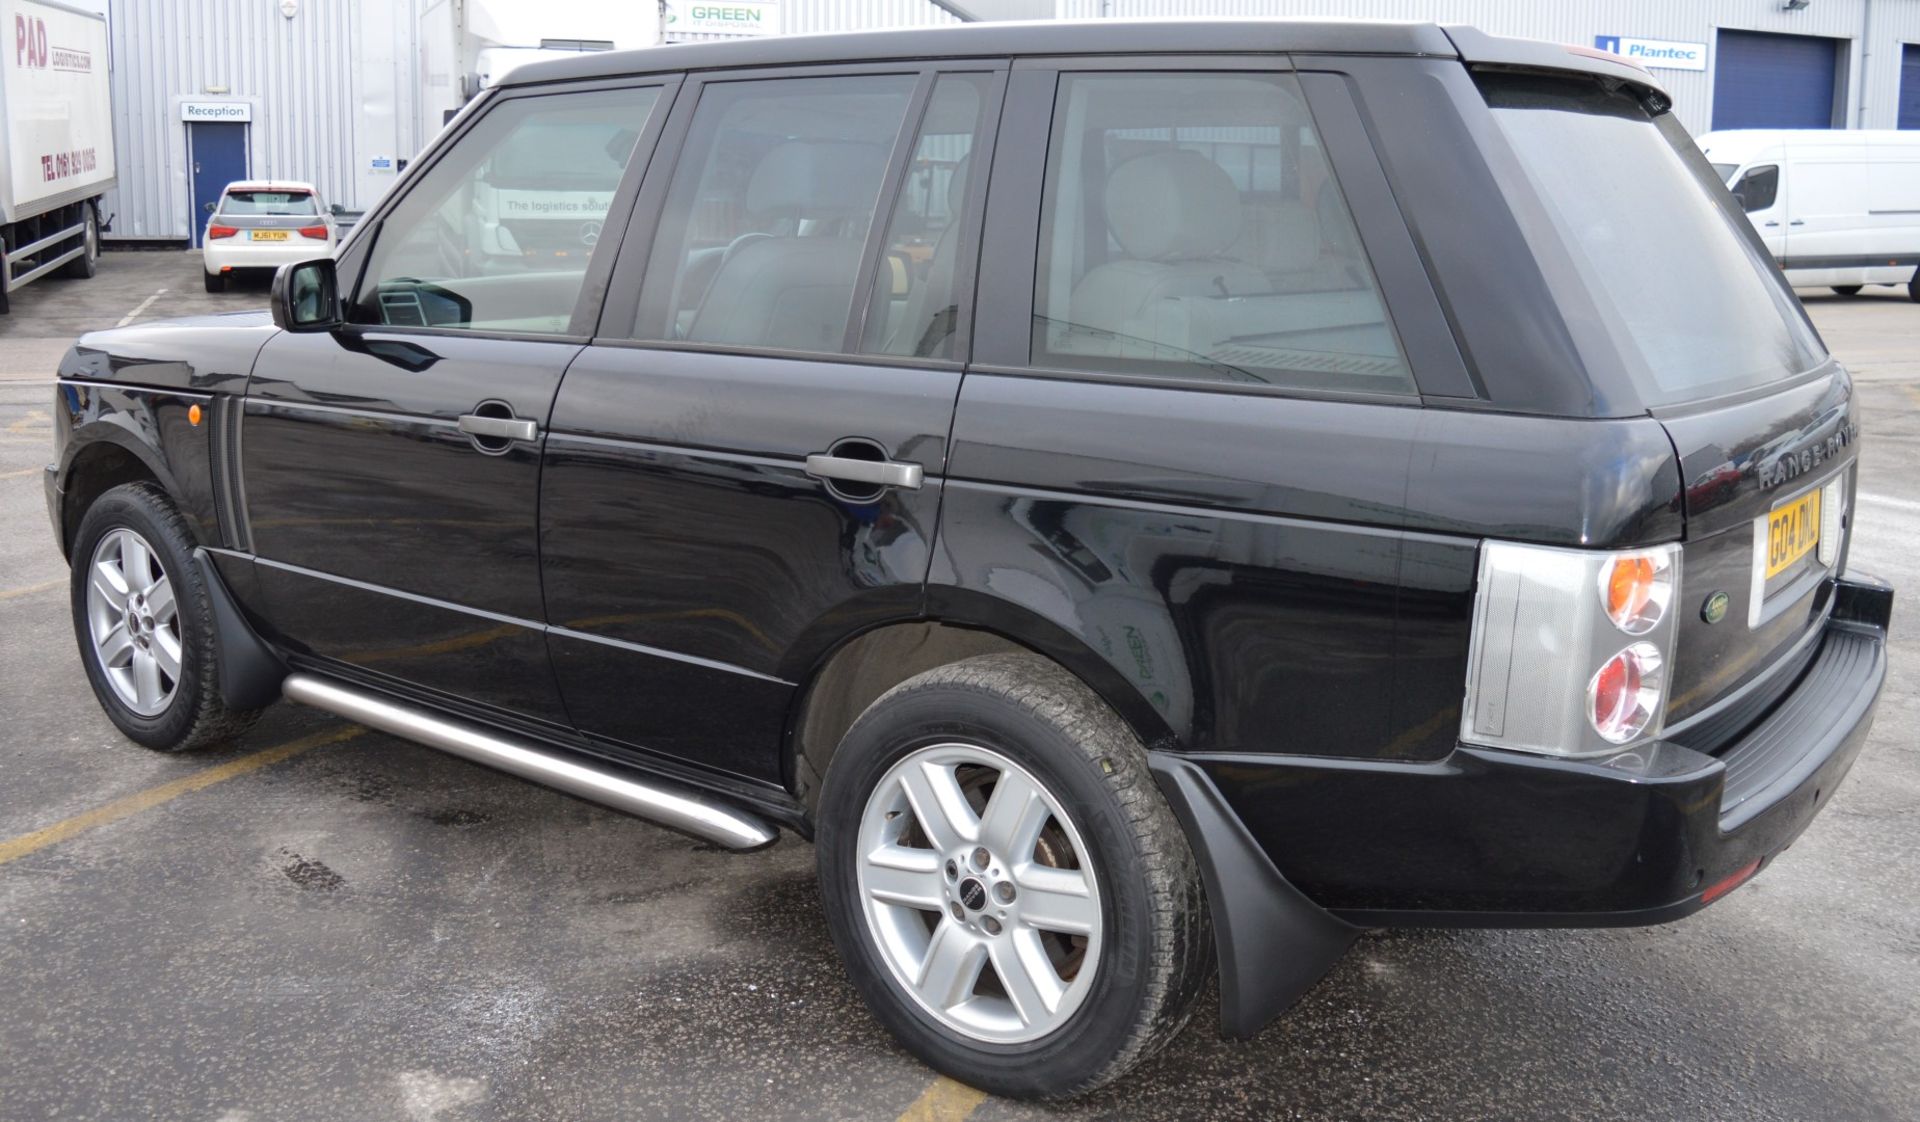 1 x Range Rover Vogue V8 4.4 Automatic - Black, Leather Interior, Petrol, Television, Premium - Image 49 of 63